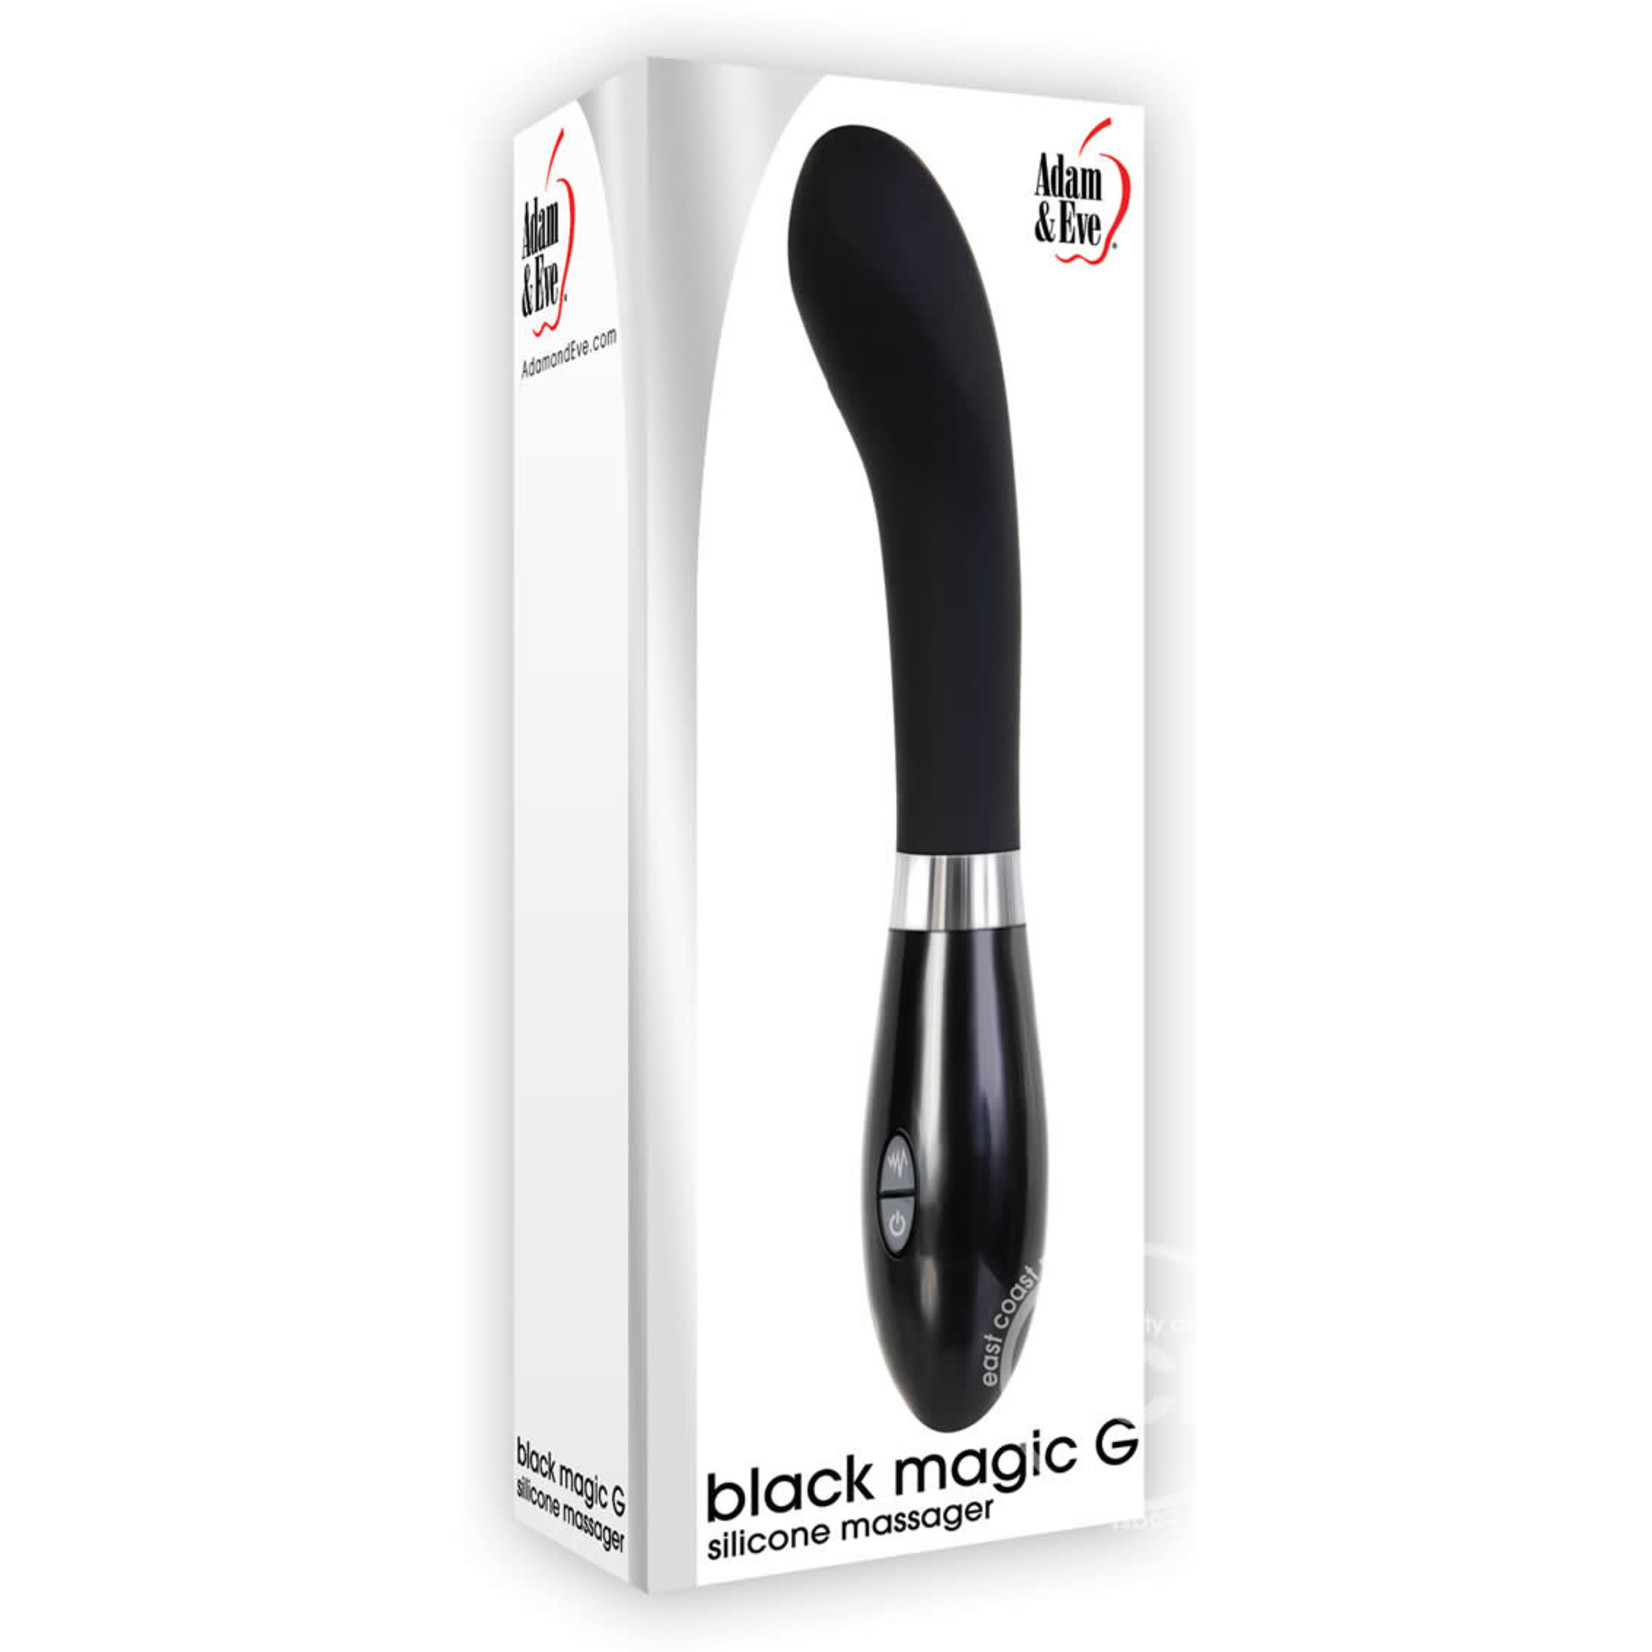 Adam & Eve Black Magic G Silicone Vibrator - Black